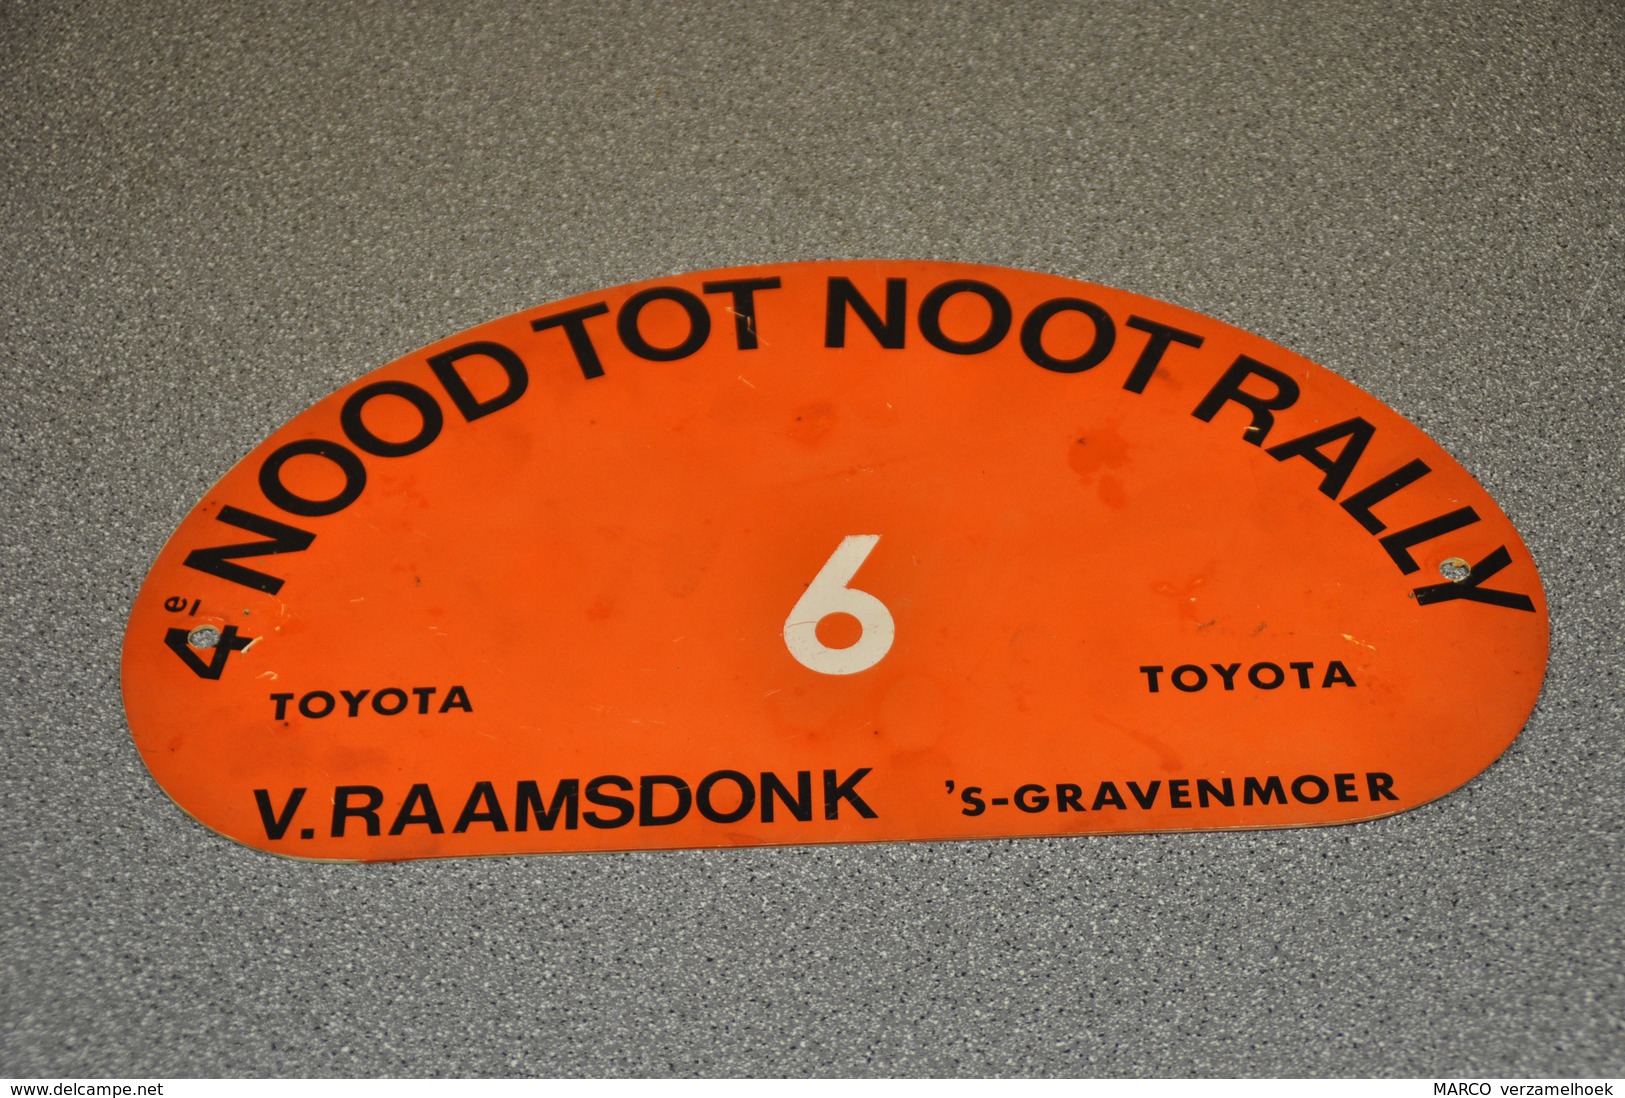 Rally Plaat-rallye Plaque Plastic: 4e Nood Tot Noot Rally Toyota Van Raamsdonk 's-gravenmoer (NL) - Rallye (Rally) Plates